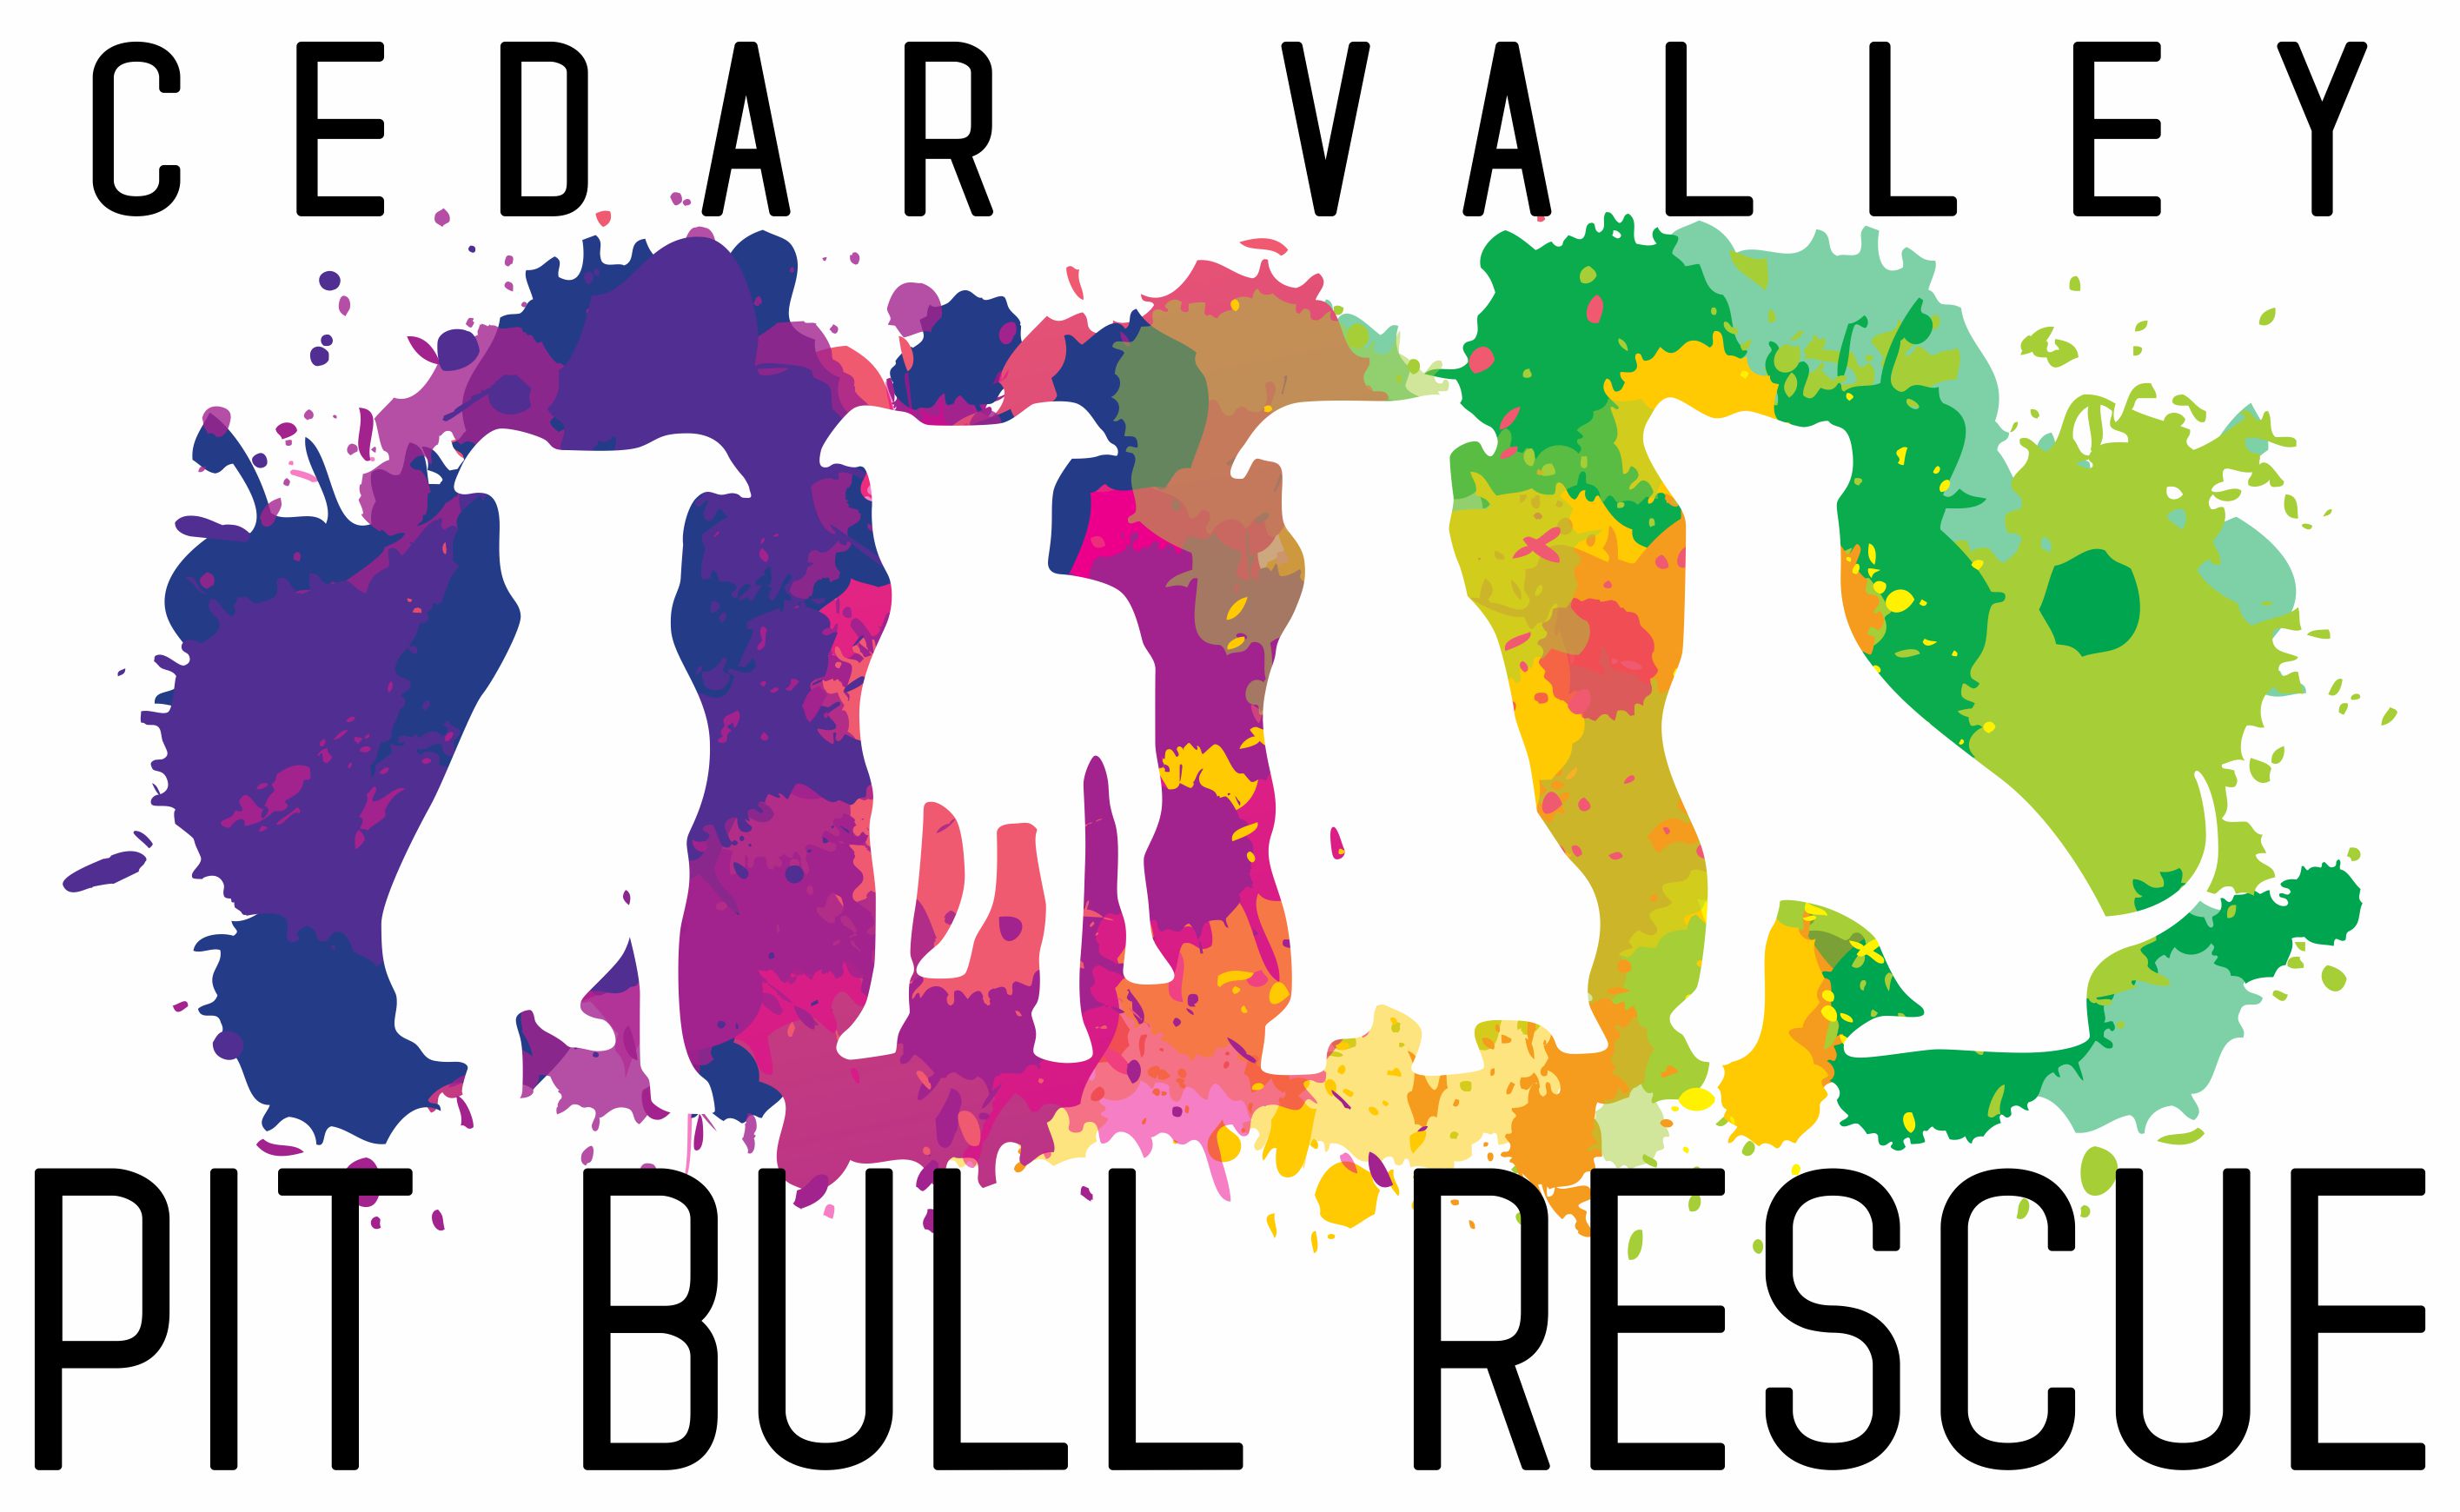 Cedar Valley Pit Bull Rescue